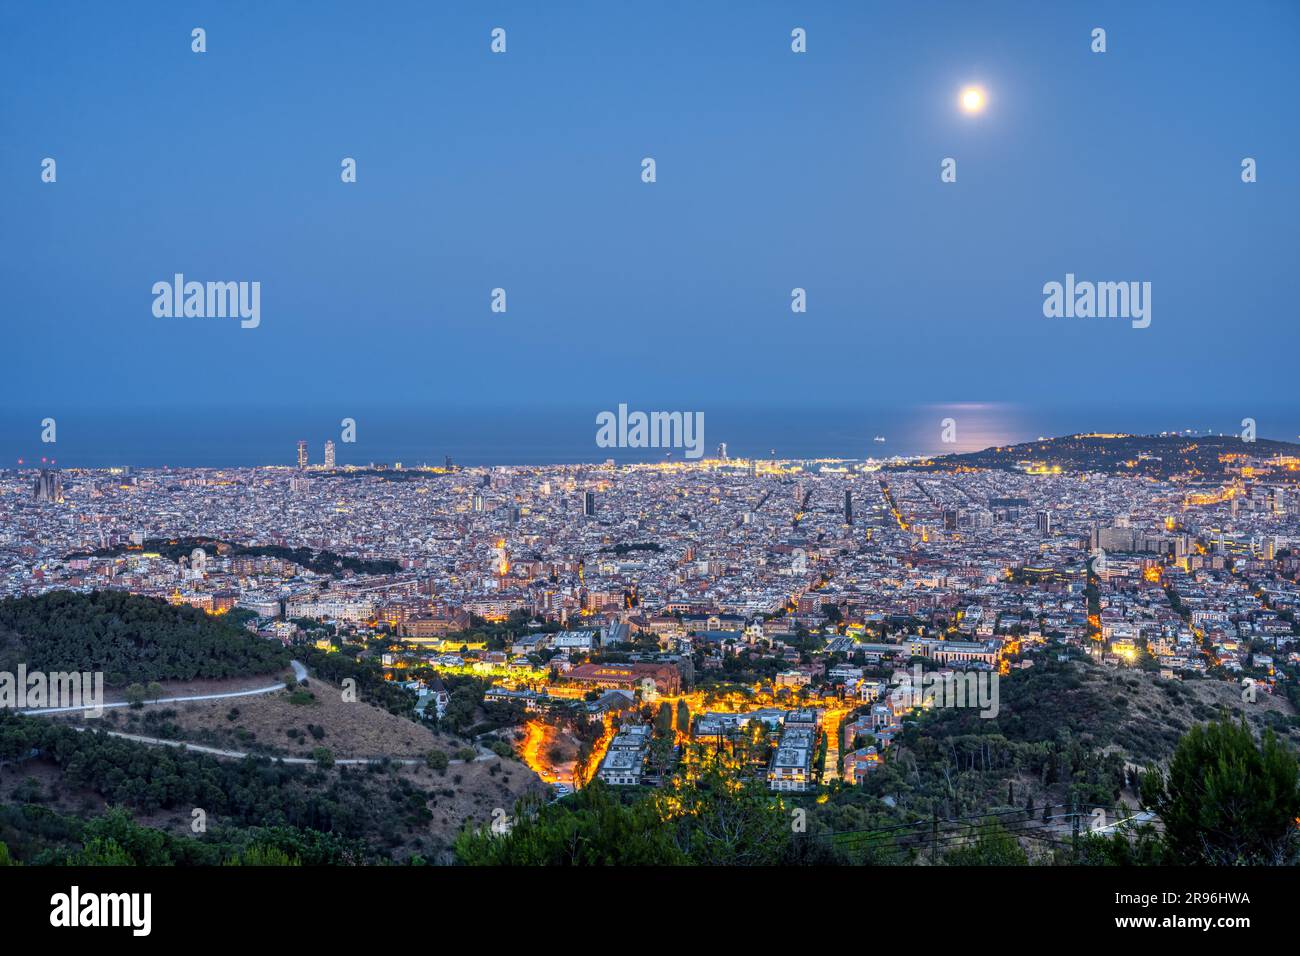 Night view of Barcelona from the Collserola mountain range under a full moon Stock Photo